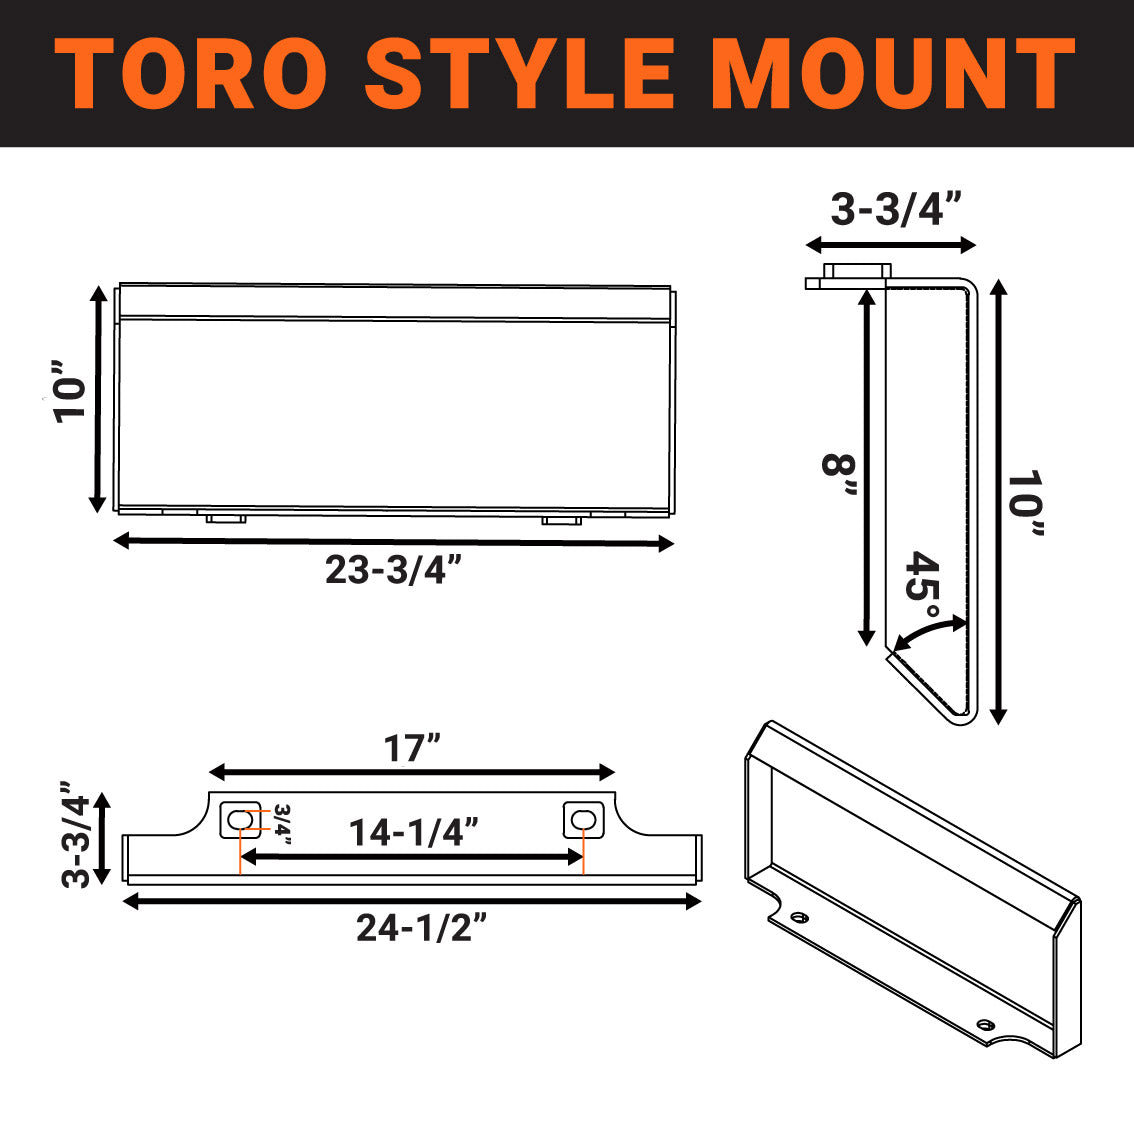 TMG Industrial 42” Mini Skid Steer Skeleton Grapple Attachment, Toro Style Mount, 24” Arm Opening, 2000 lb Weight Capacity, TMG-SG42